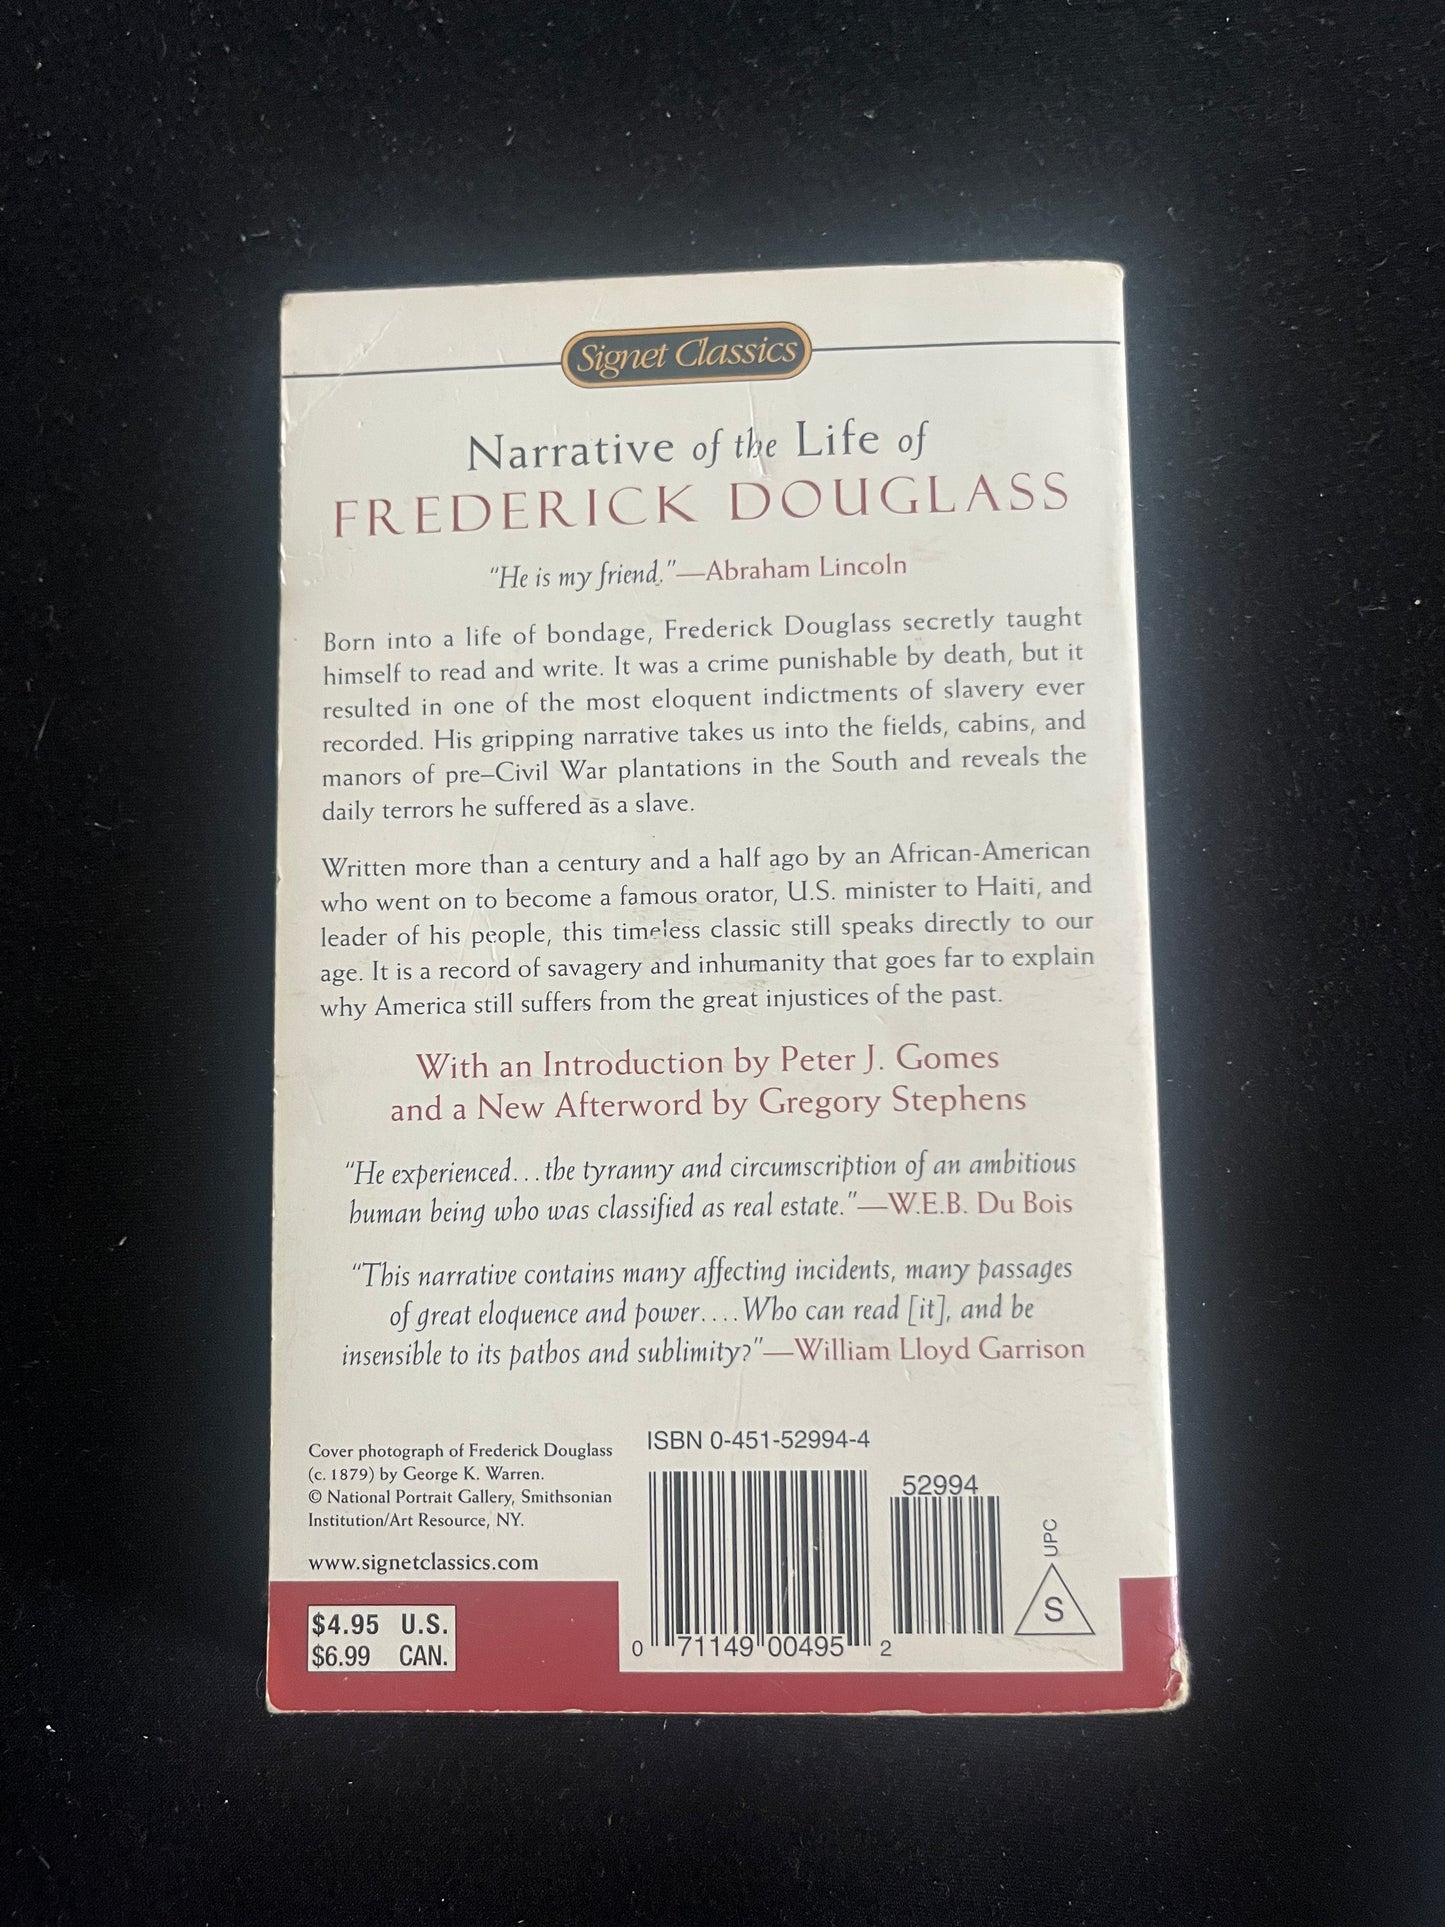 NARRATIVE OF THE LIFE OF FREDERICK DOUGLASS by Frederick Douglass